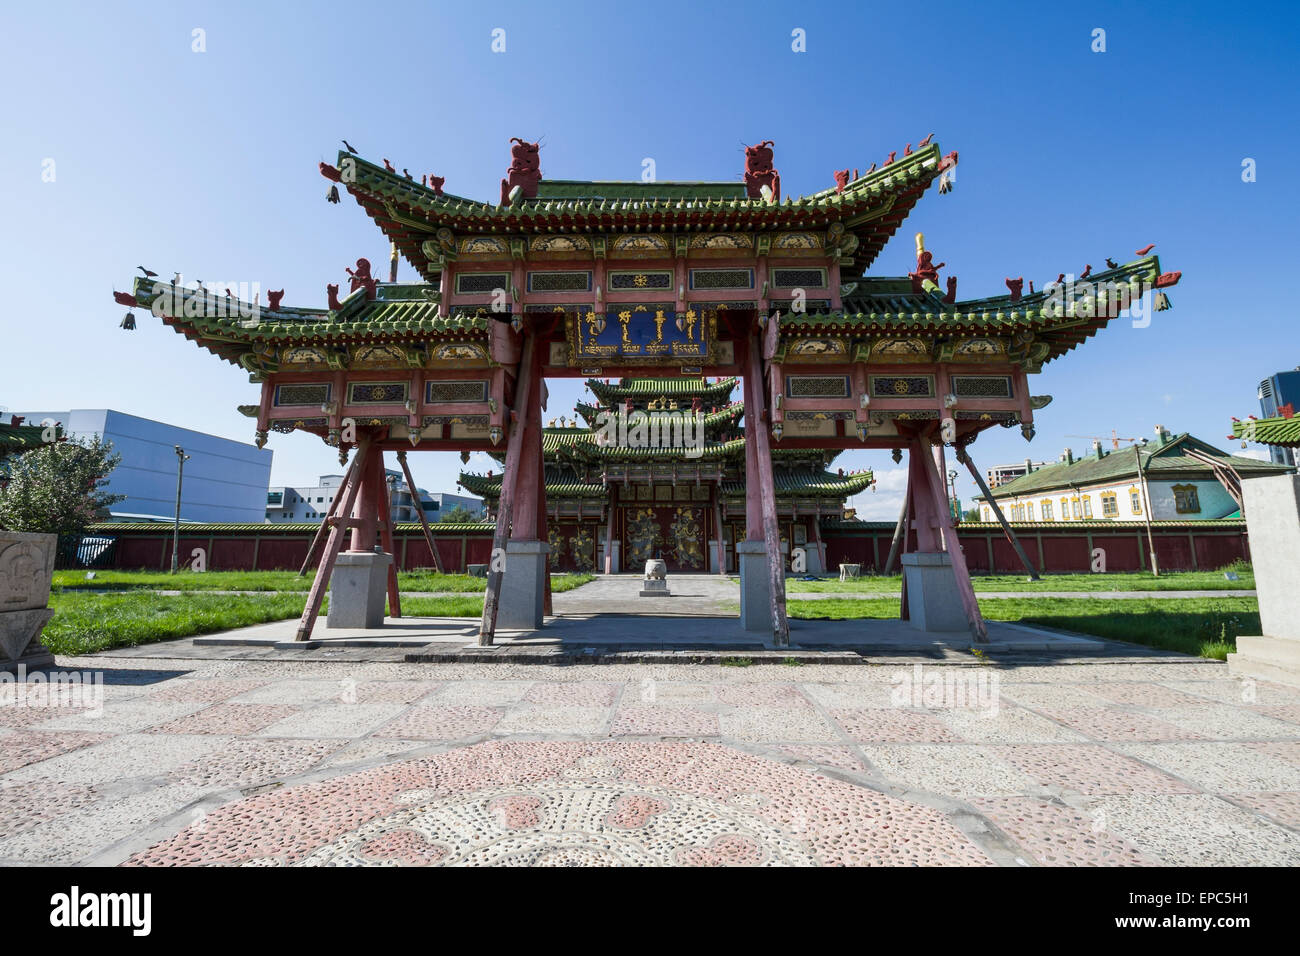 Entrance gate to the Winter Palace of the Bogd Khan, Ulaanbaatar (Ulan Bator), Mongolia Stock Photo